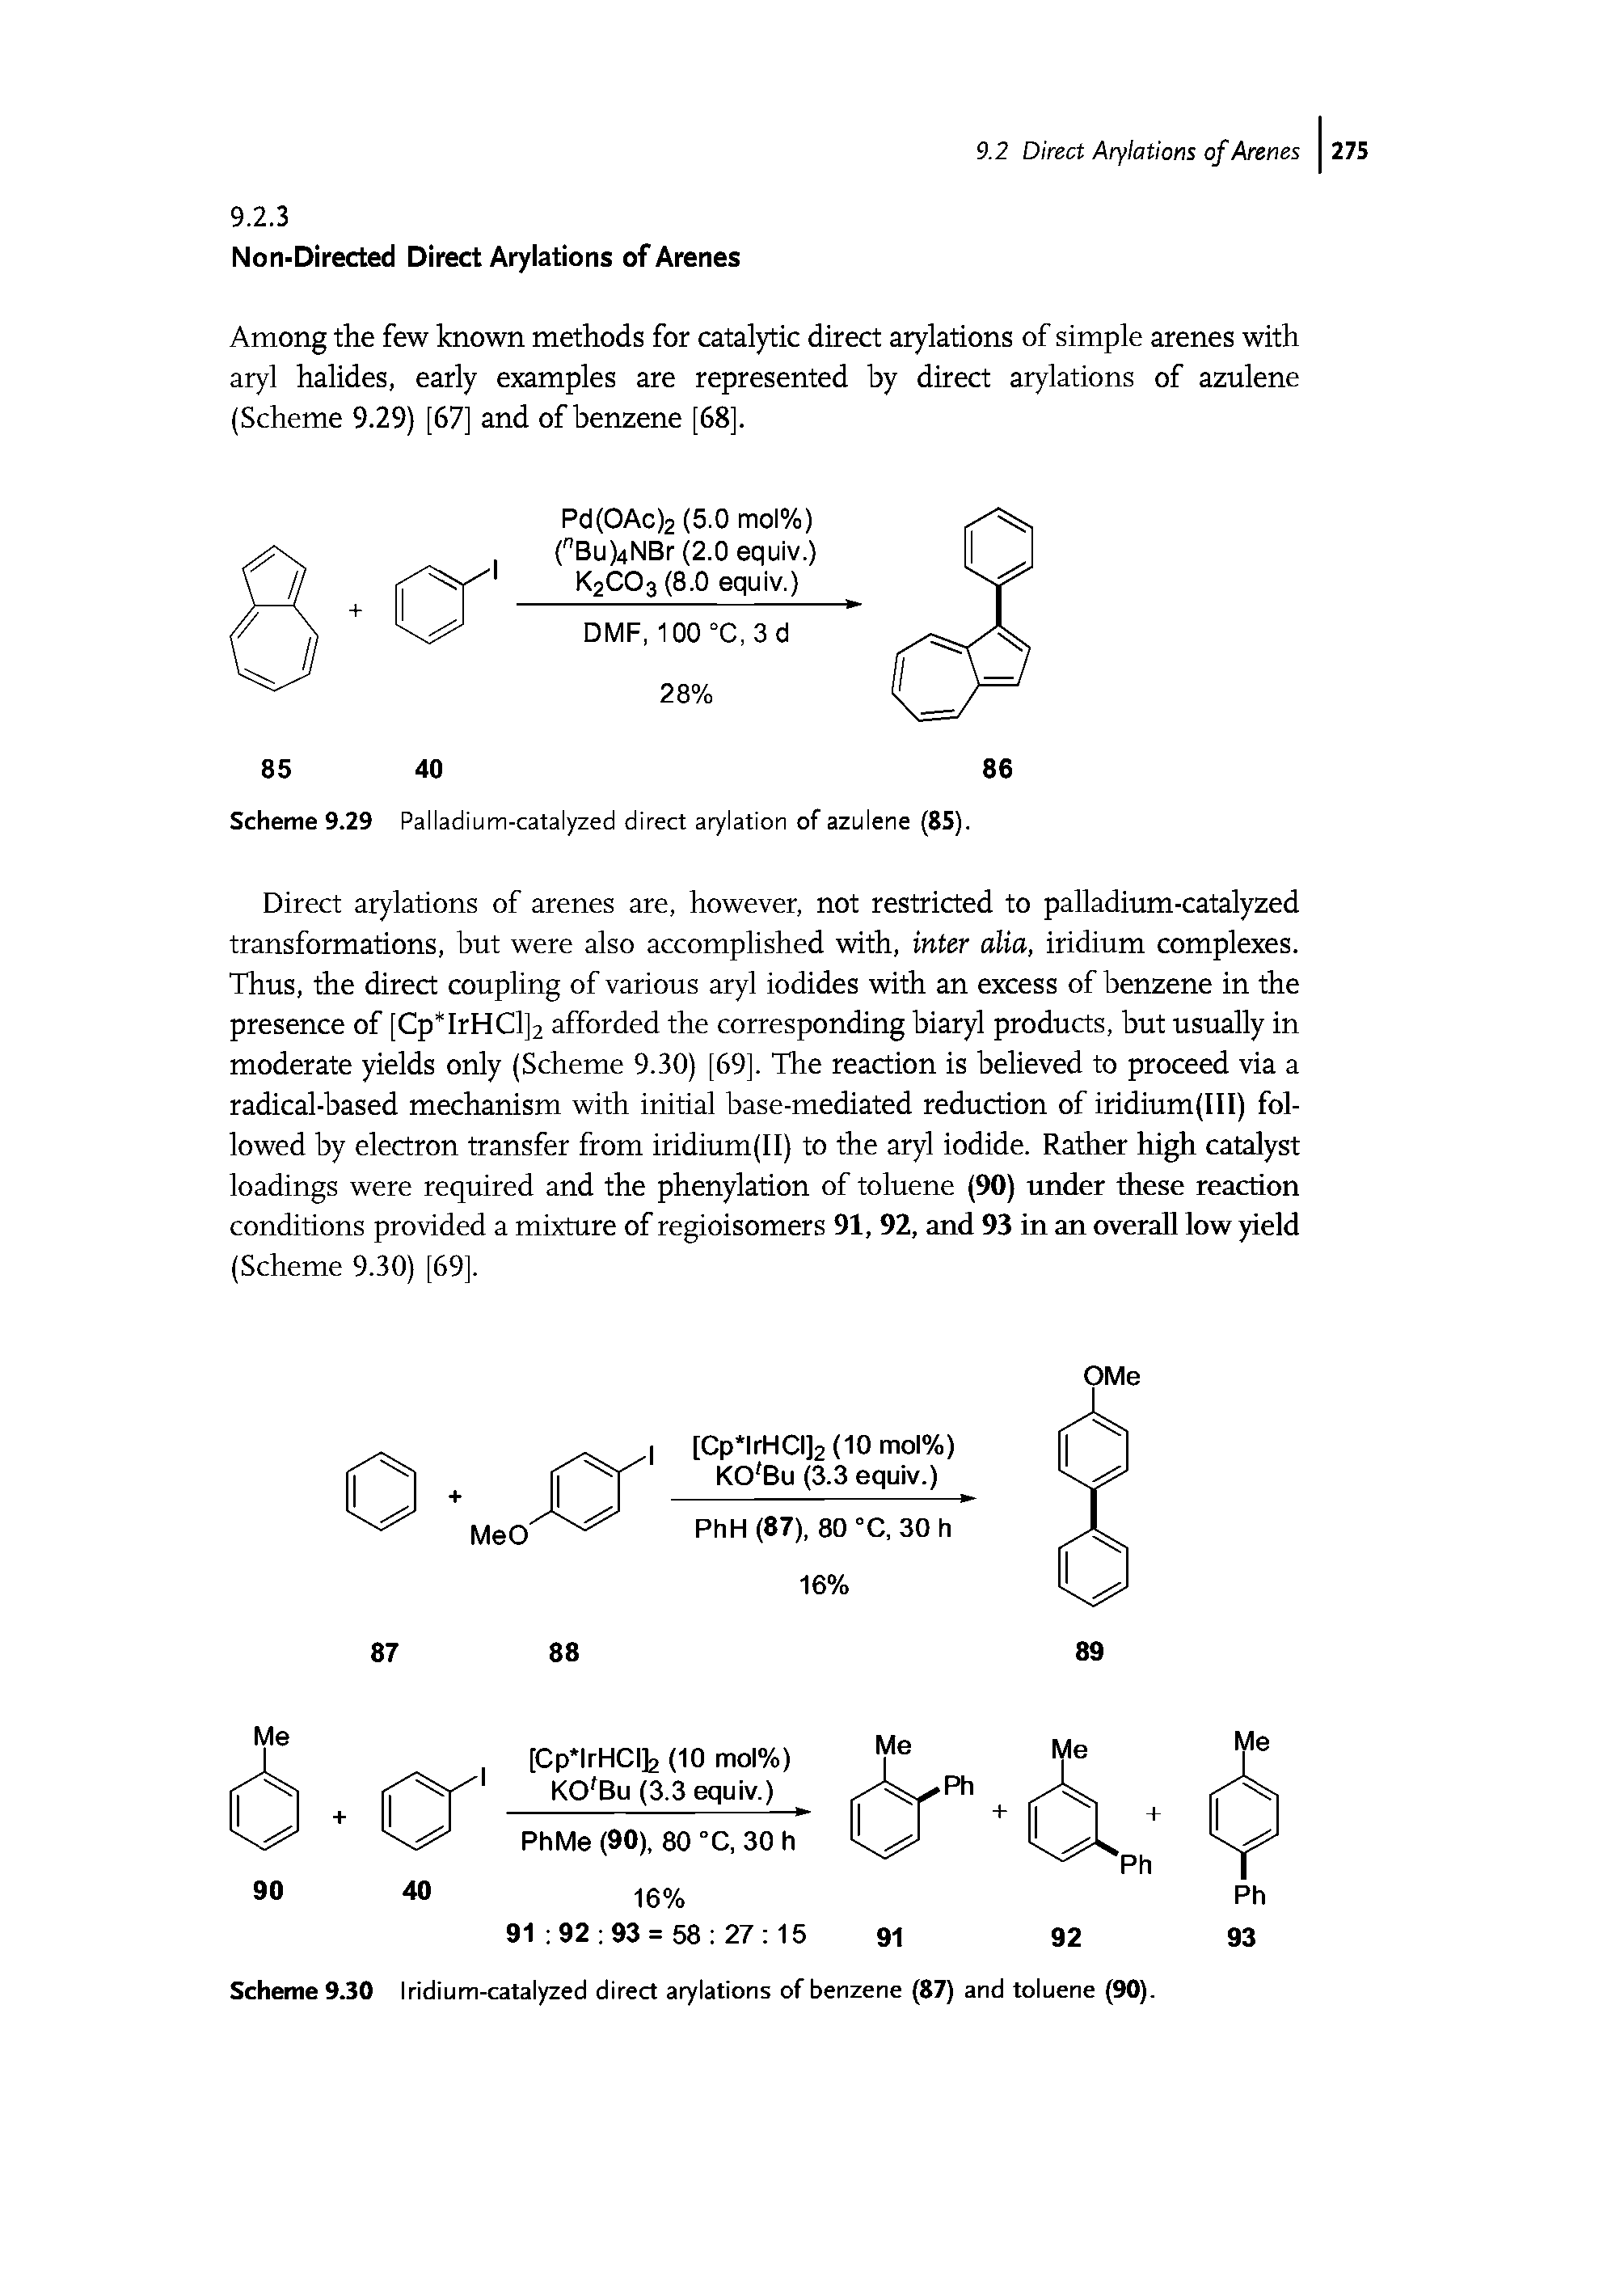 Scheme 9.29 Palladium-catalyzed direct arylation of azulene (85).